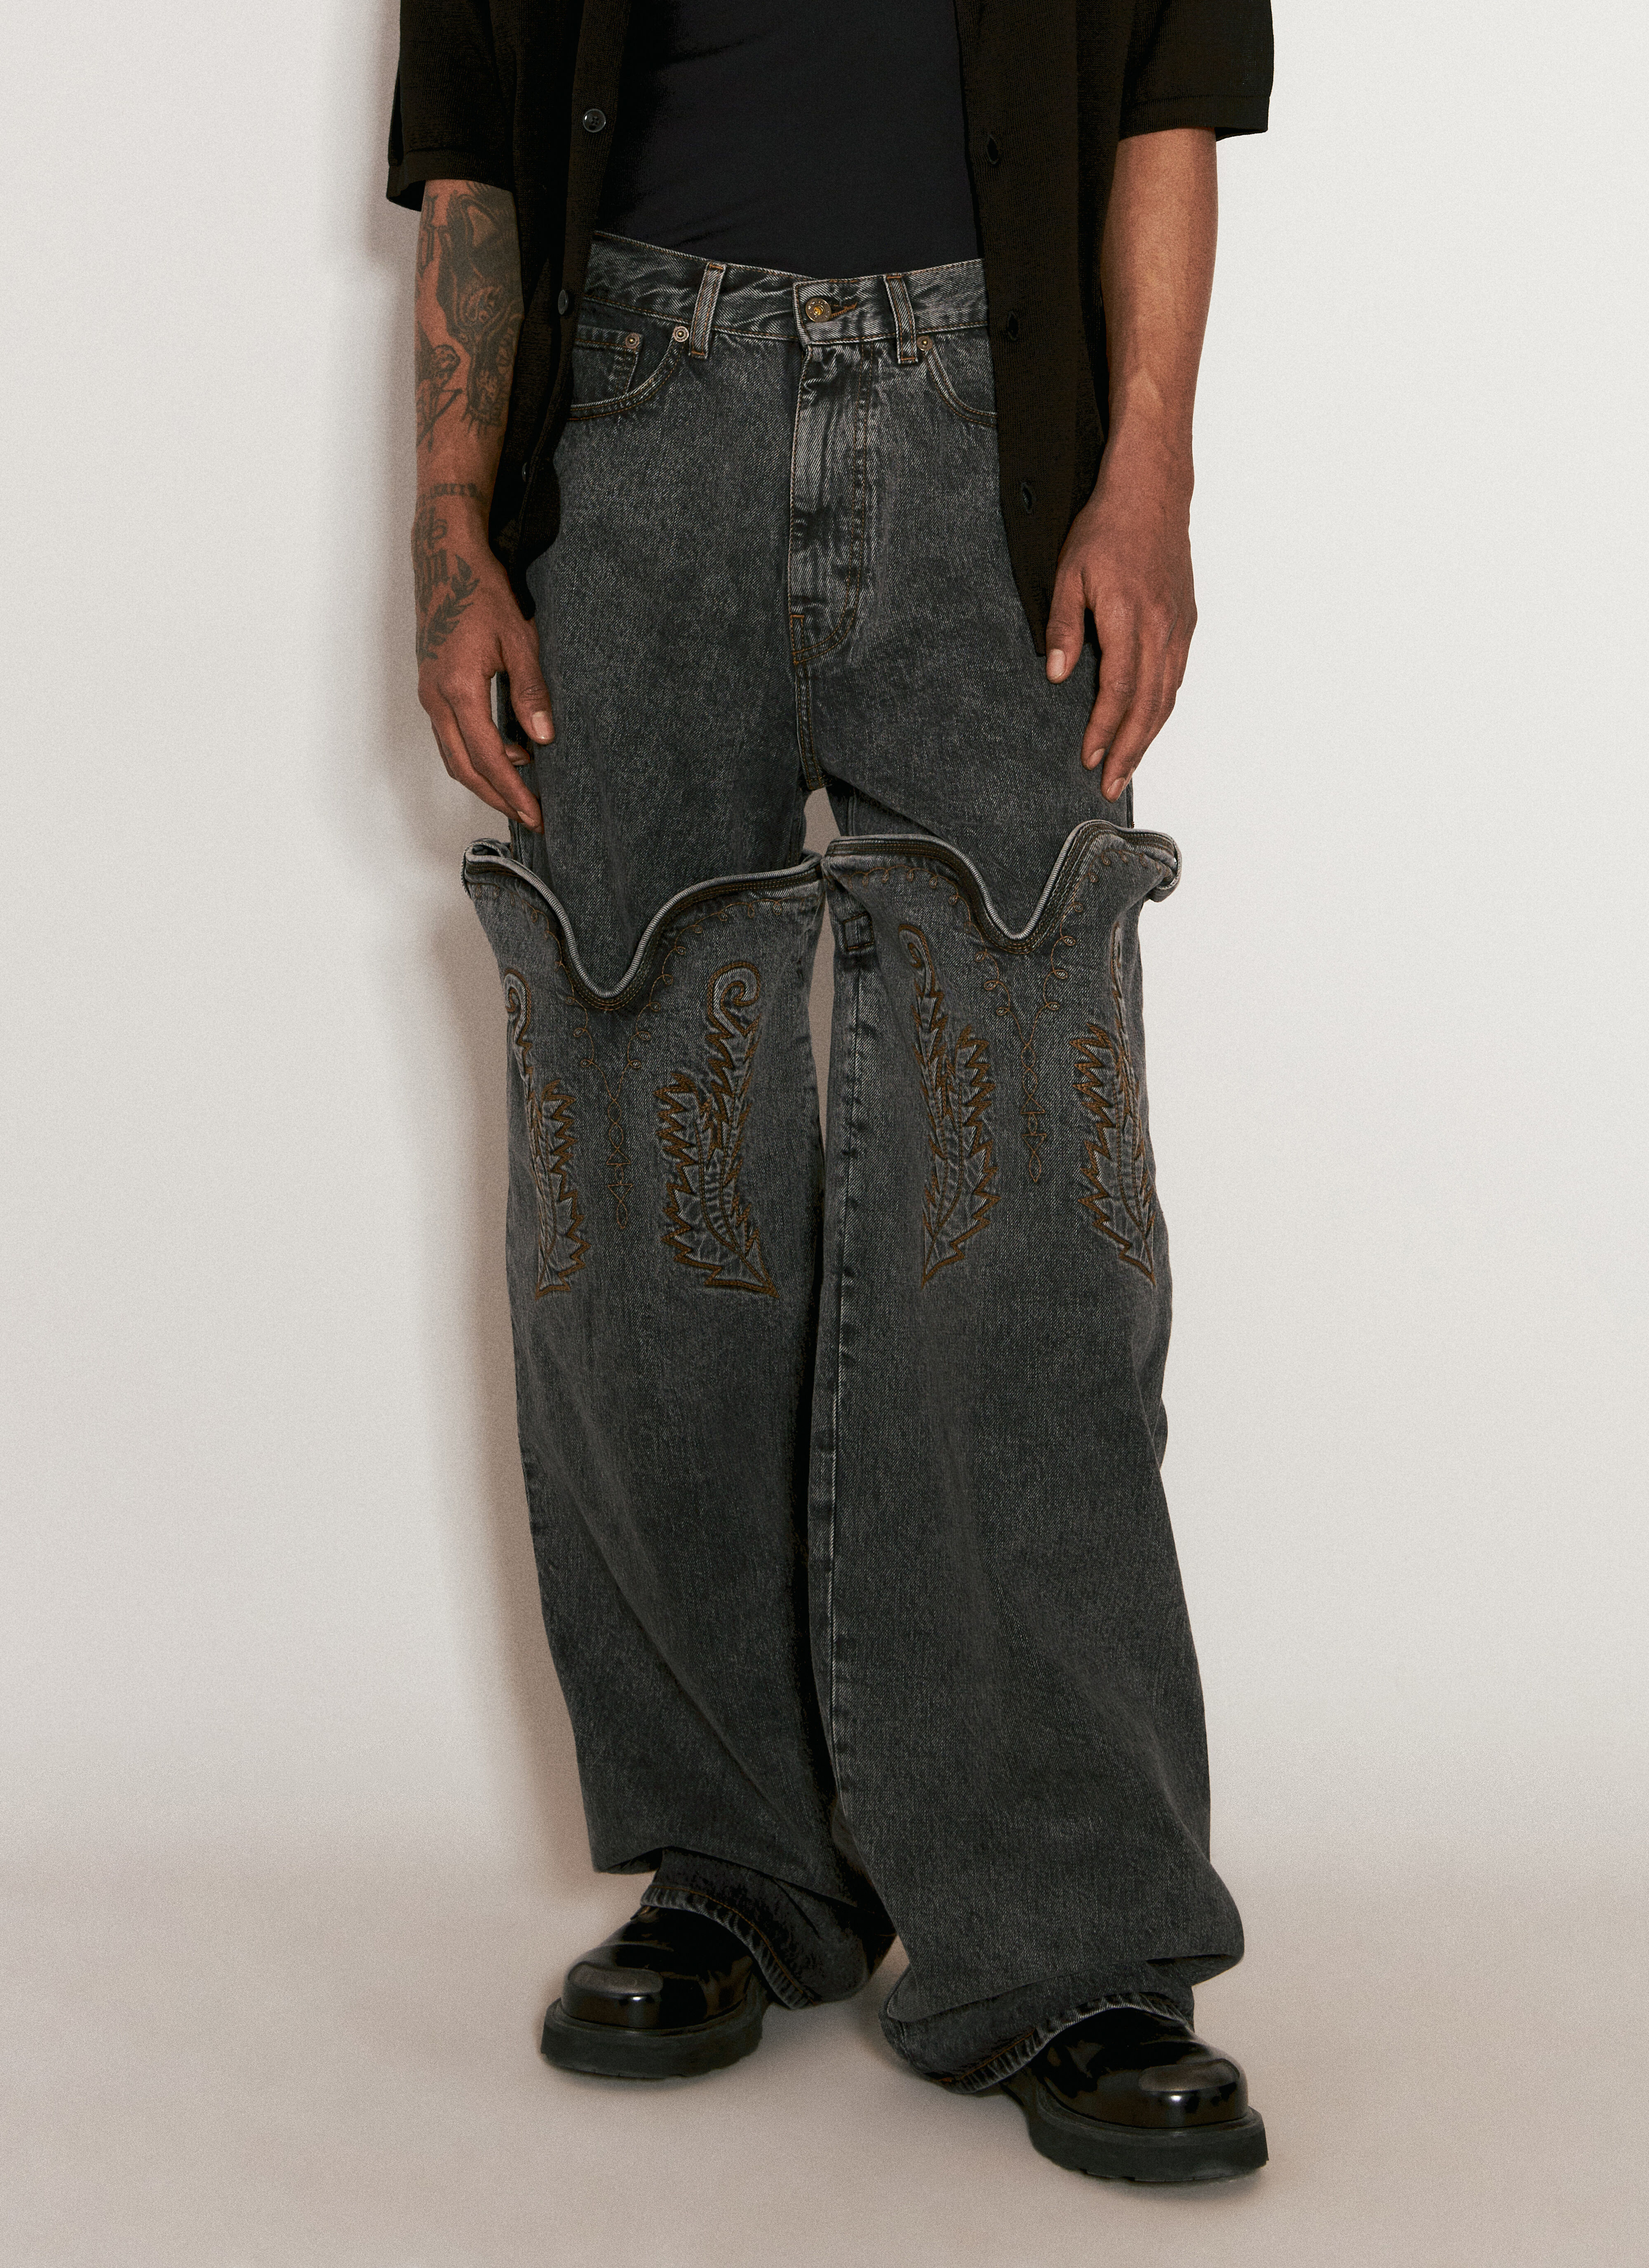 Aaron Esh Evergreen Maxi Cowboy Cuff Jeans Ivory ash0154001